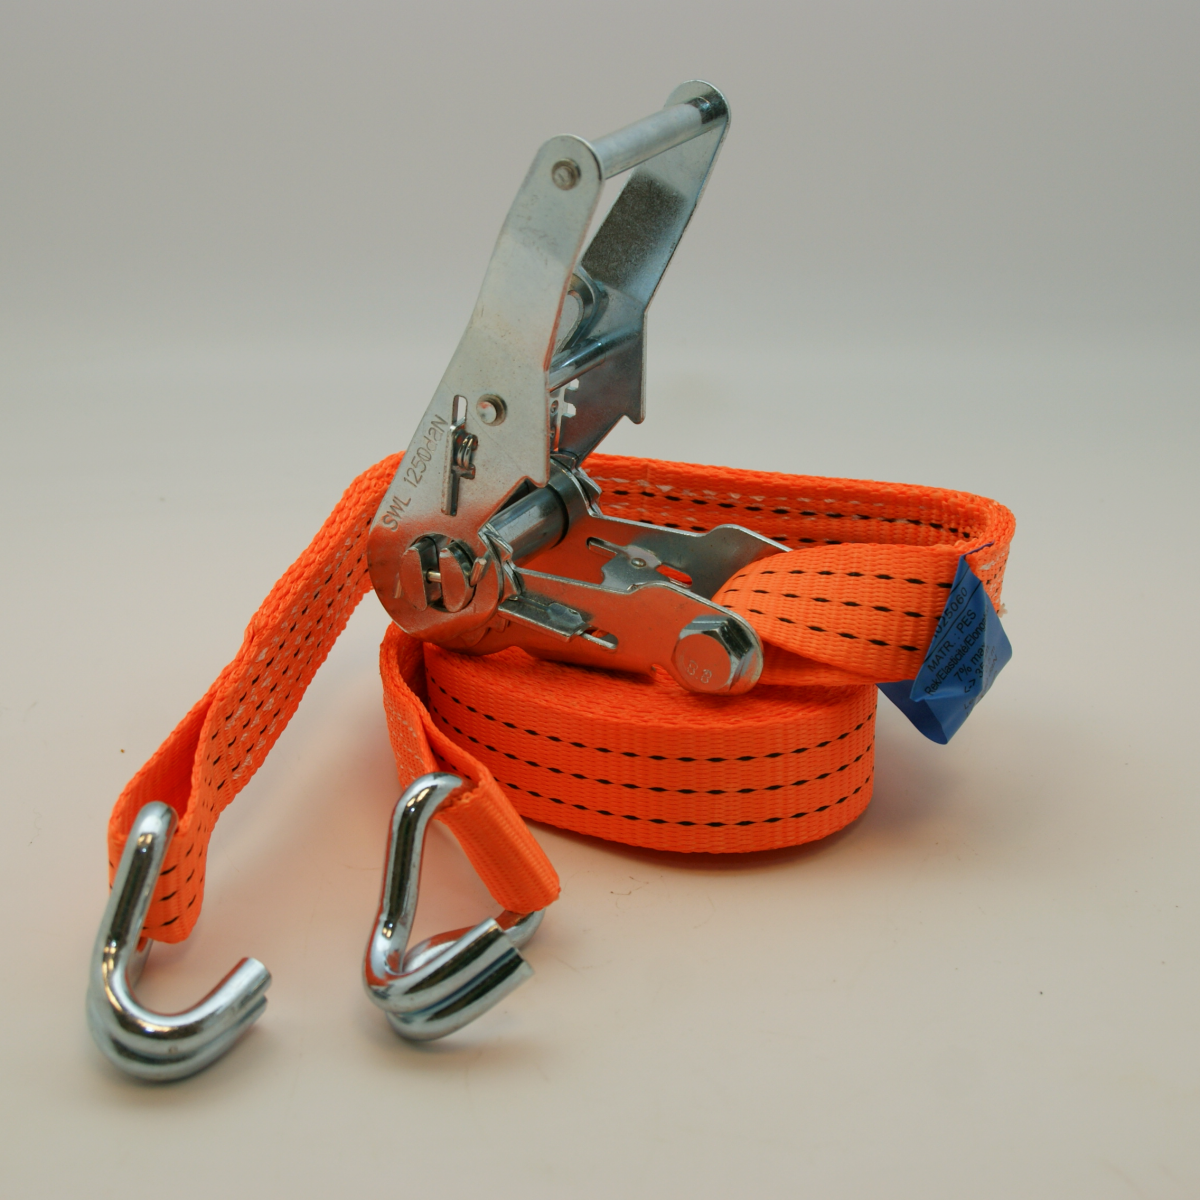 Sjorband: Spanband smalle haak oranje, 35mm 1250daN 4m